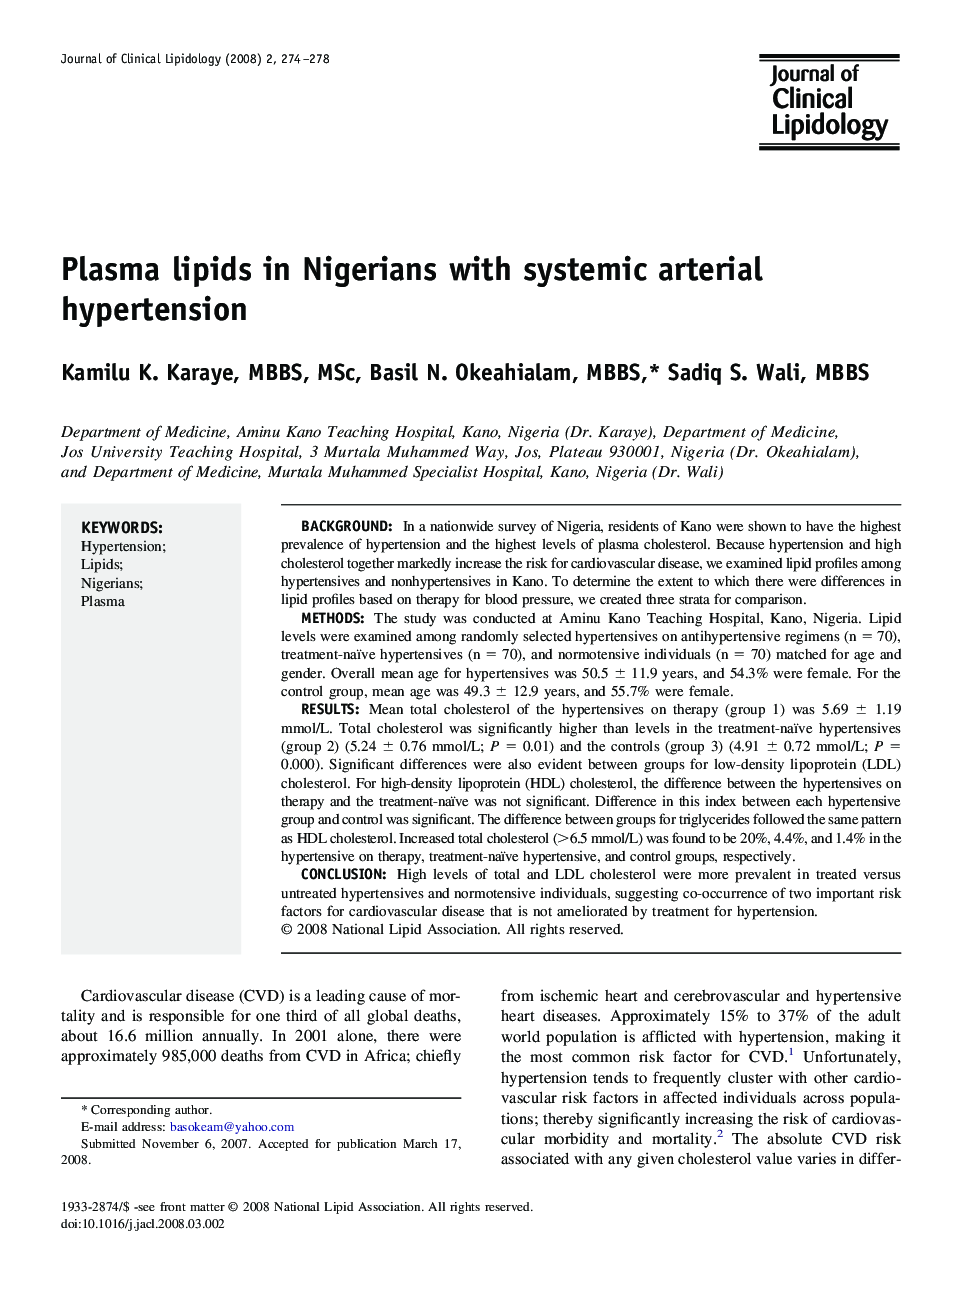 Plasma lipids in Nigerians with systemic arterial hypertension